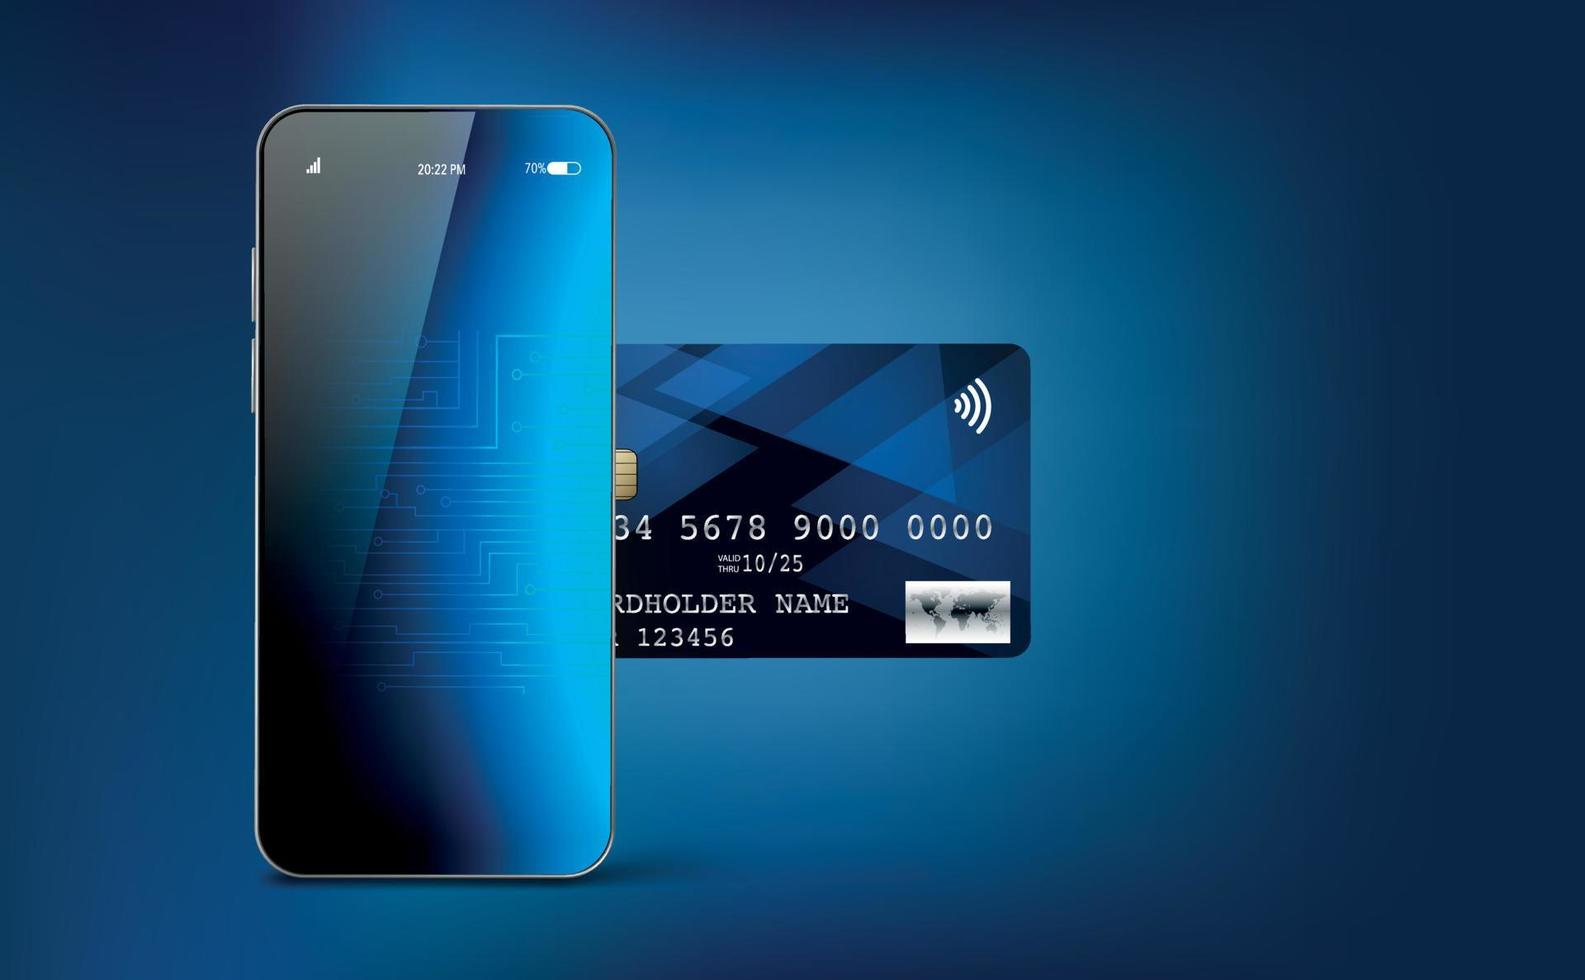 bank digitalt kreditkort koncept med mobiltelefon, blå gradient bakgrund. vektor illustration